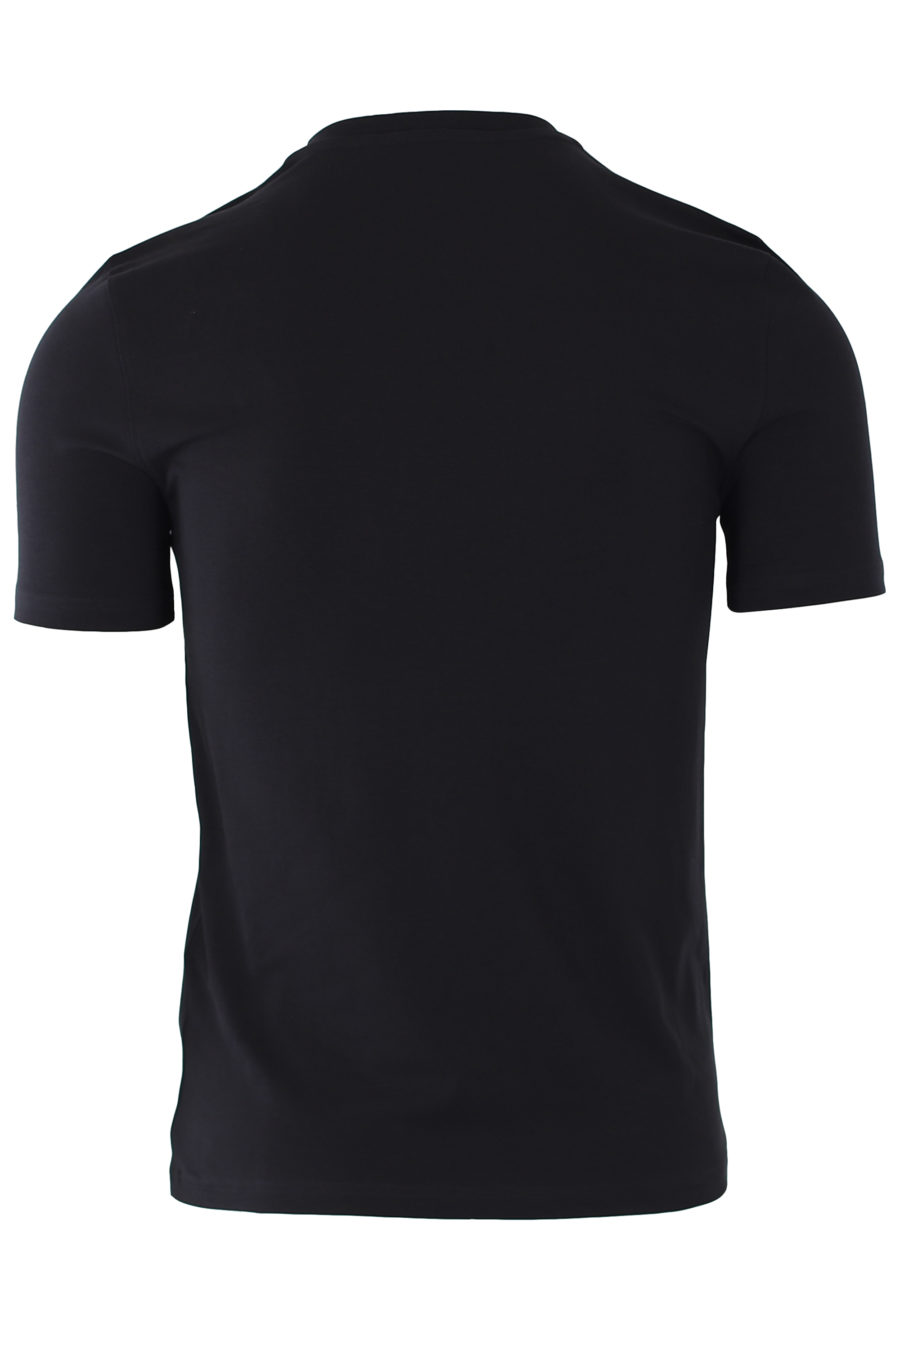 Camiseta negra con logo milano pequeño "fantasy" - IMG 9325